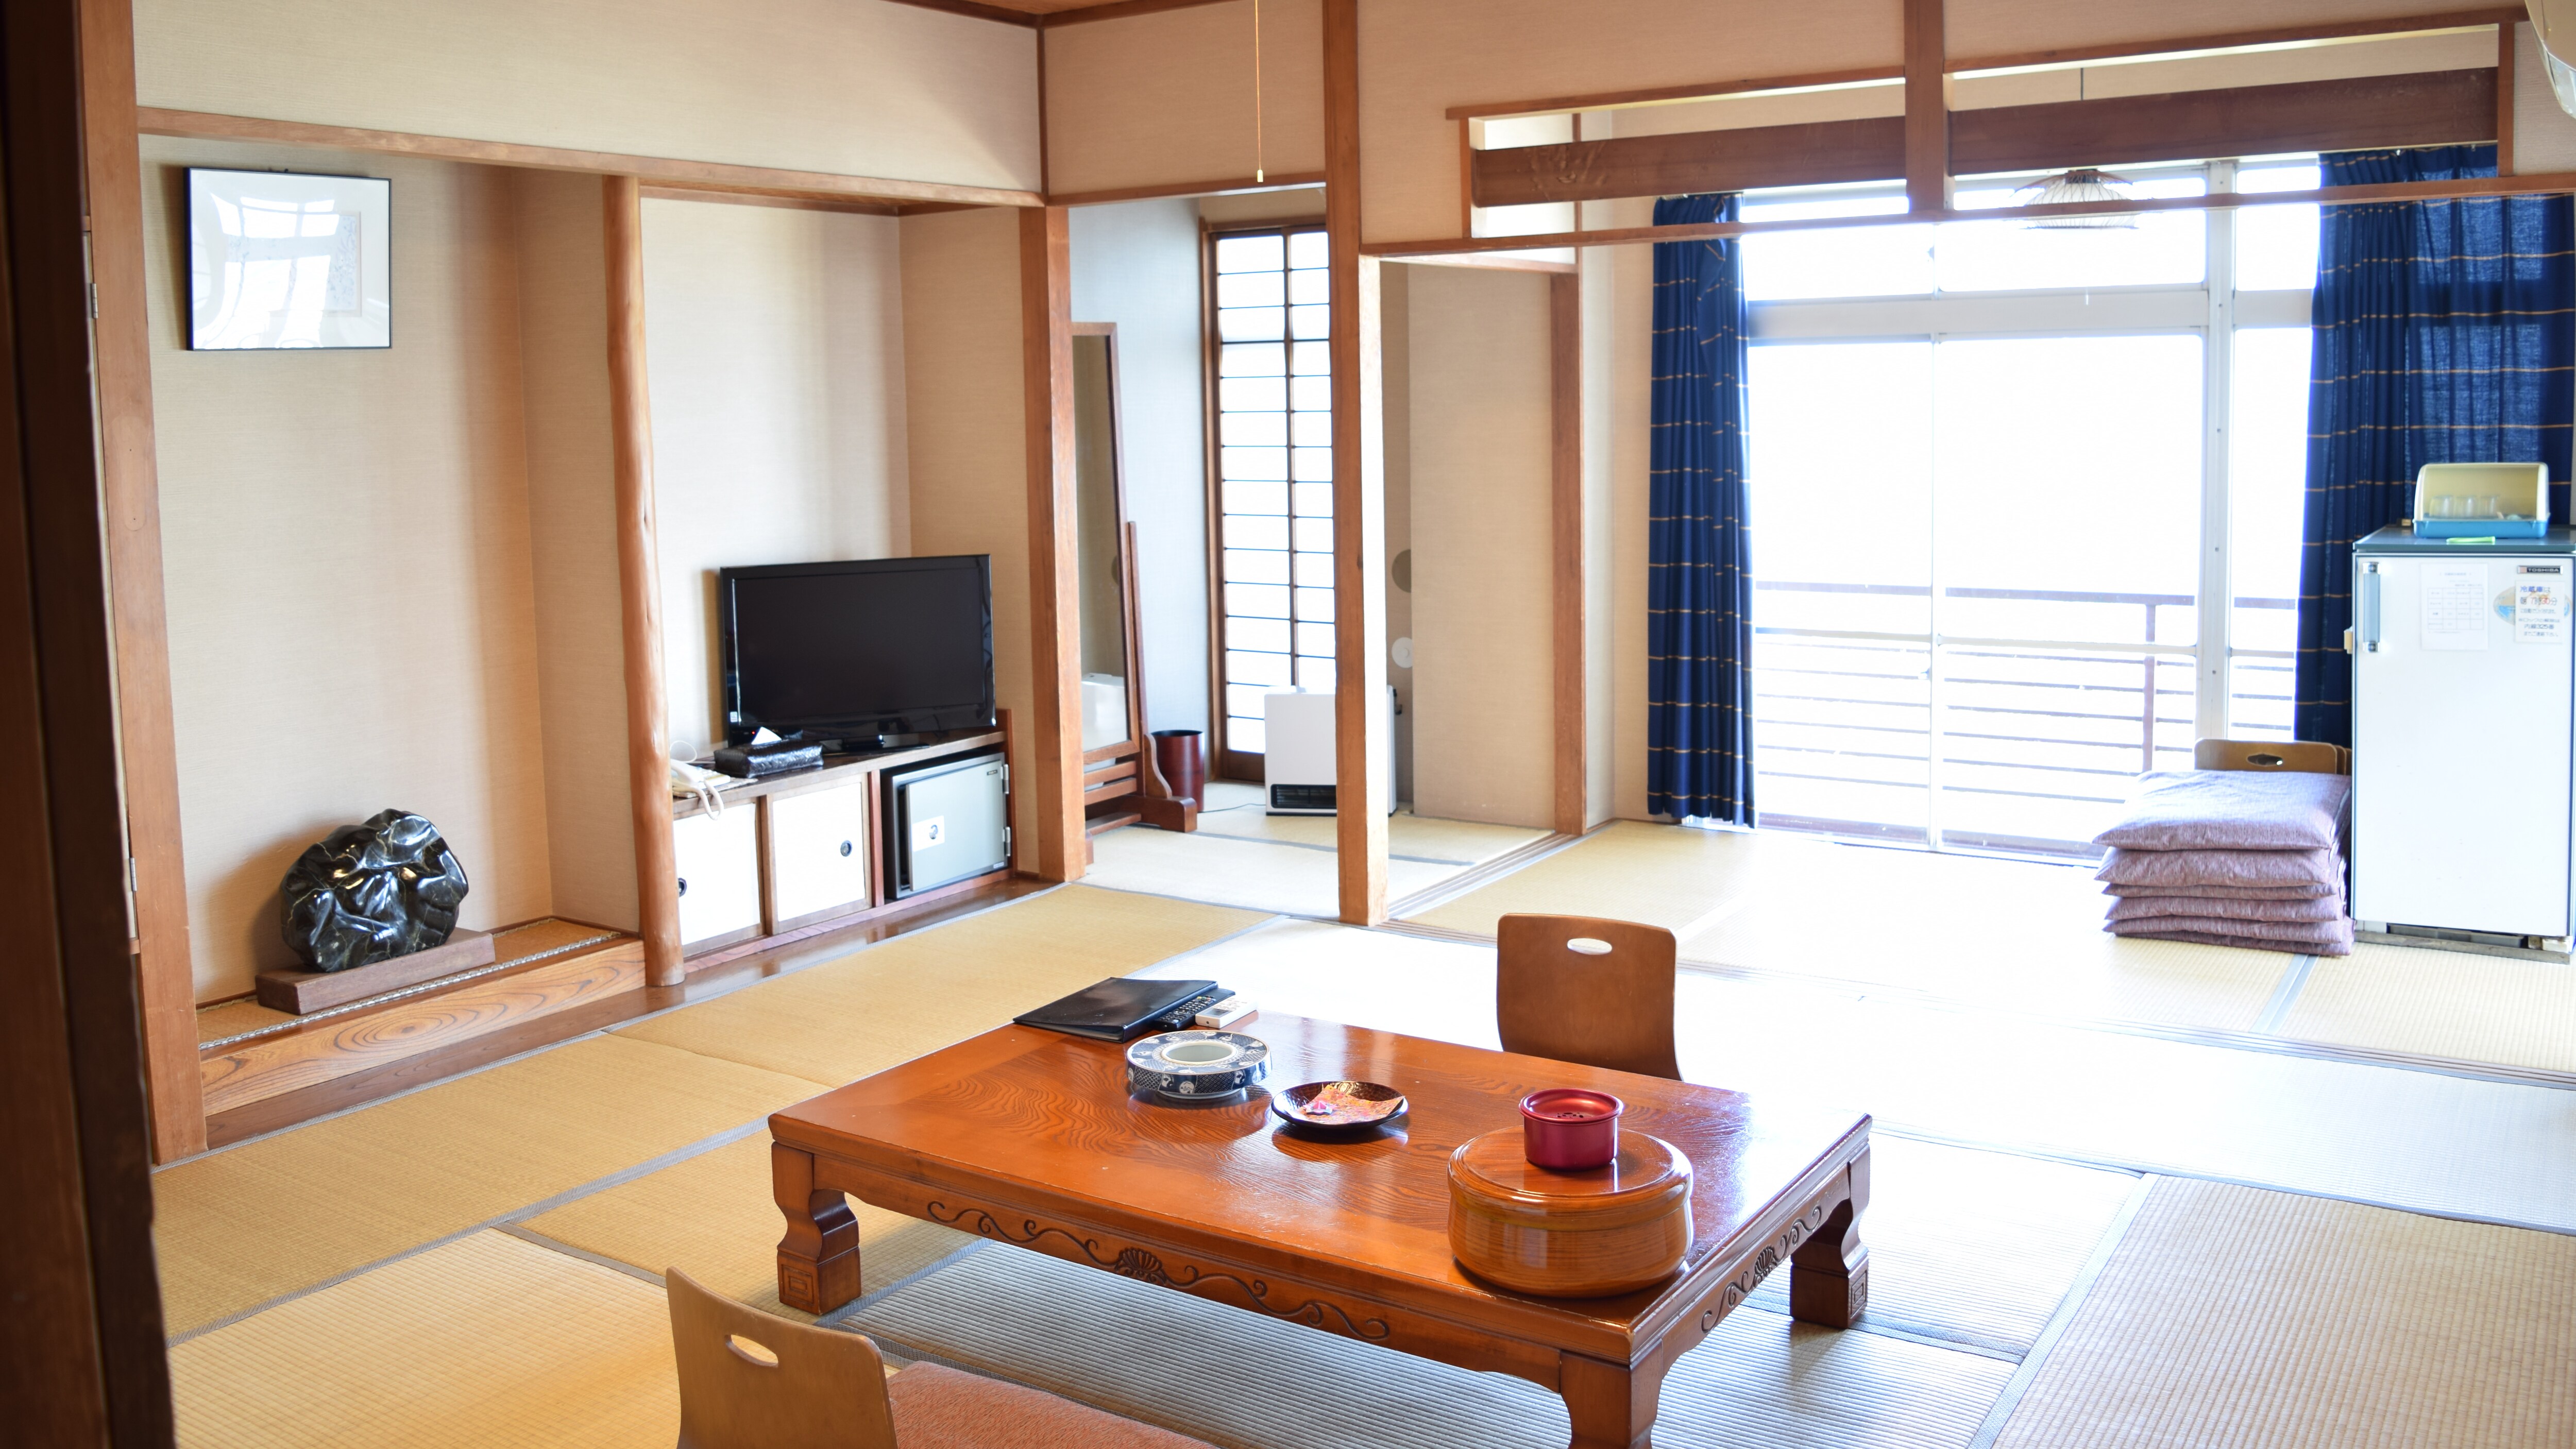 Room type: Omakase Japanese-style room